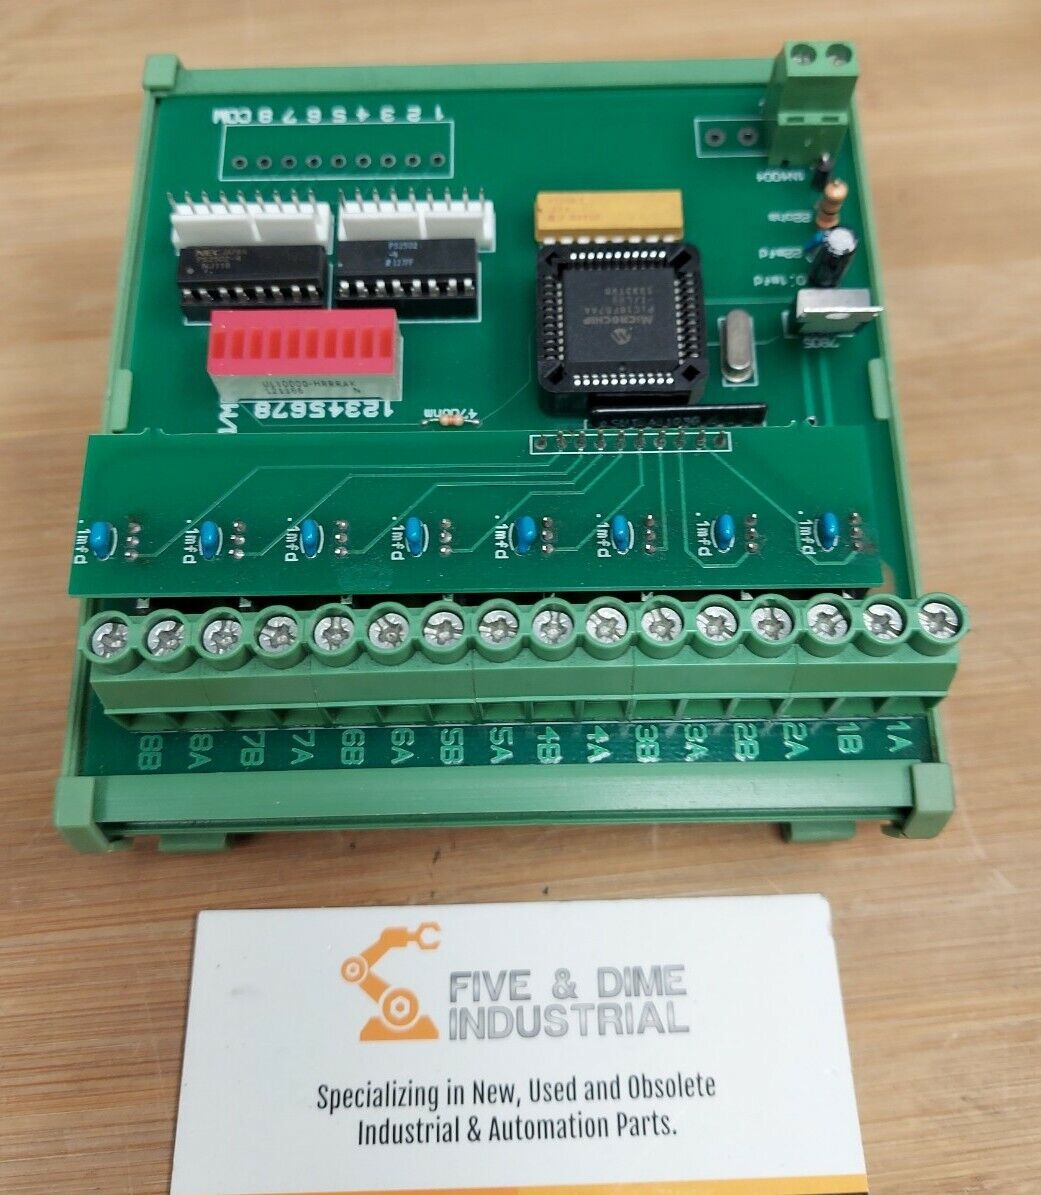 Phoenix Contact CS08 Circuit Board Control Board Rev 5.00 Hi Power  (BK106)